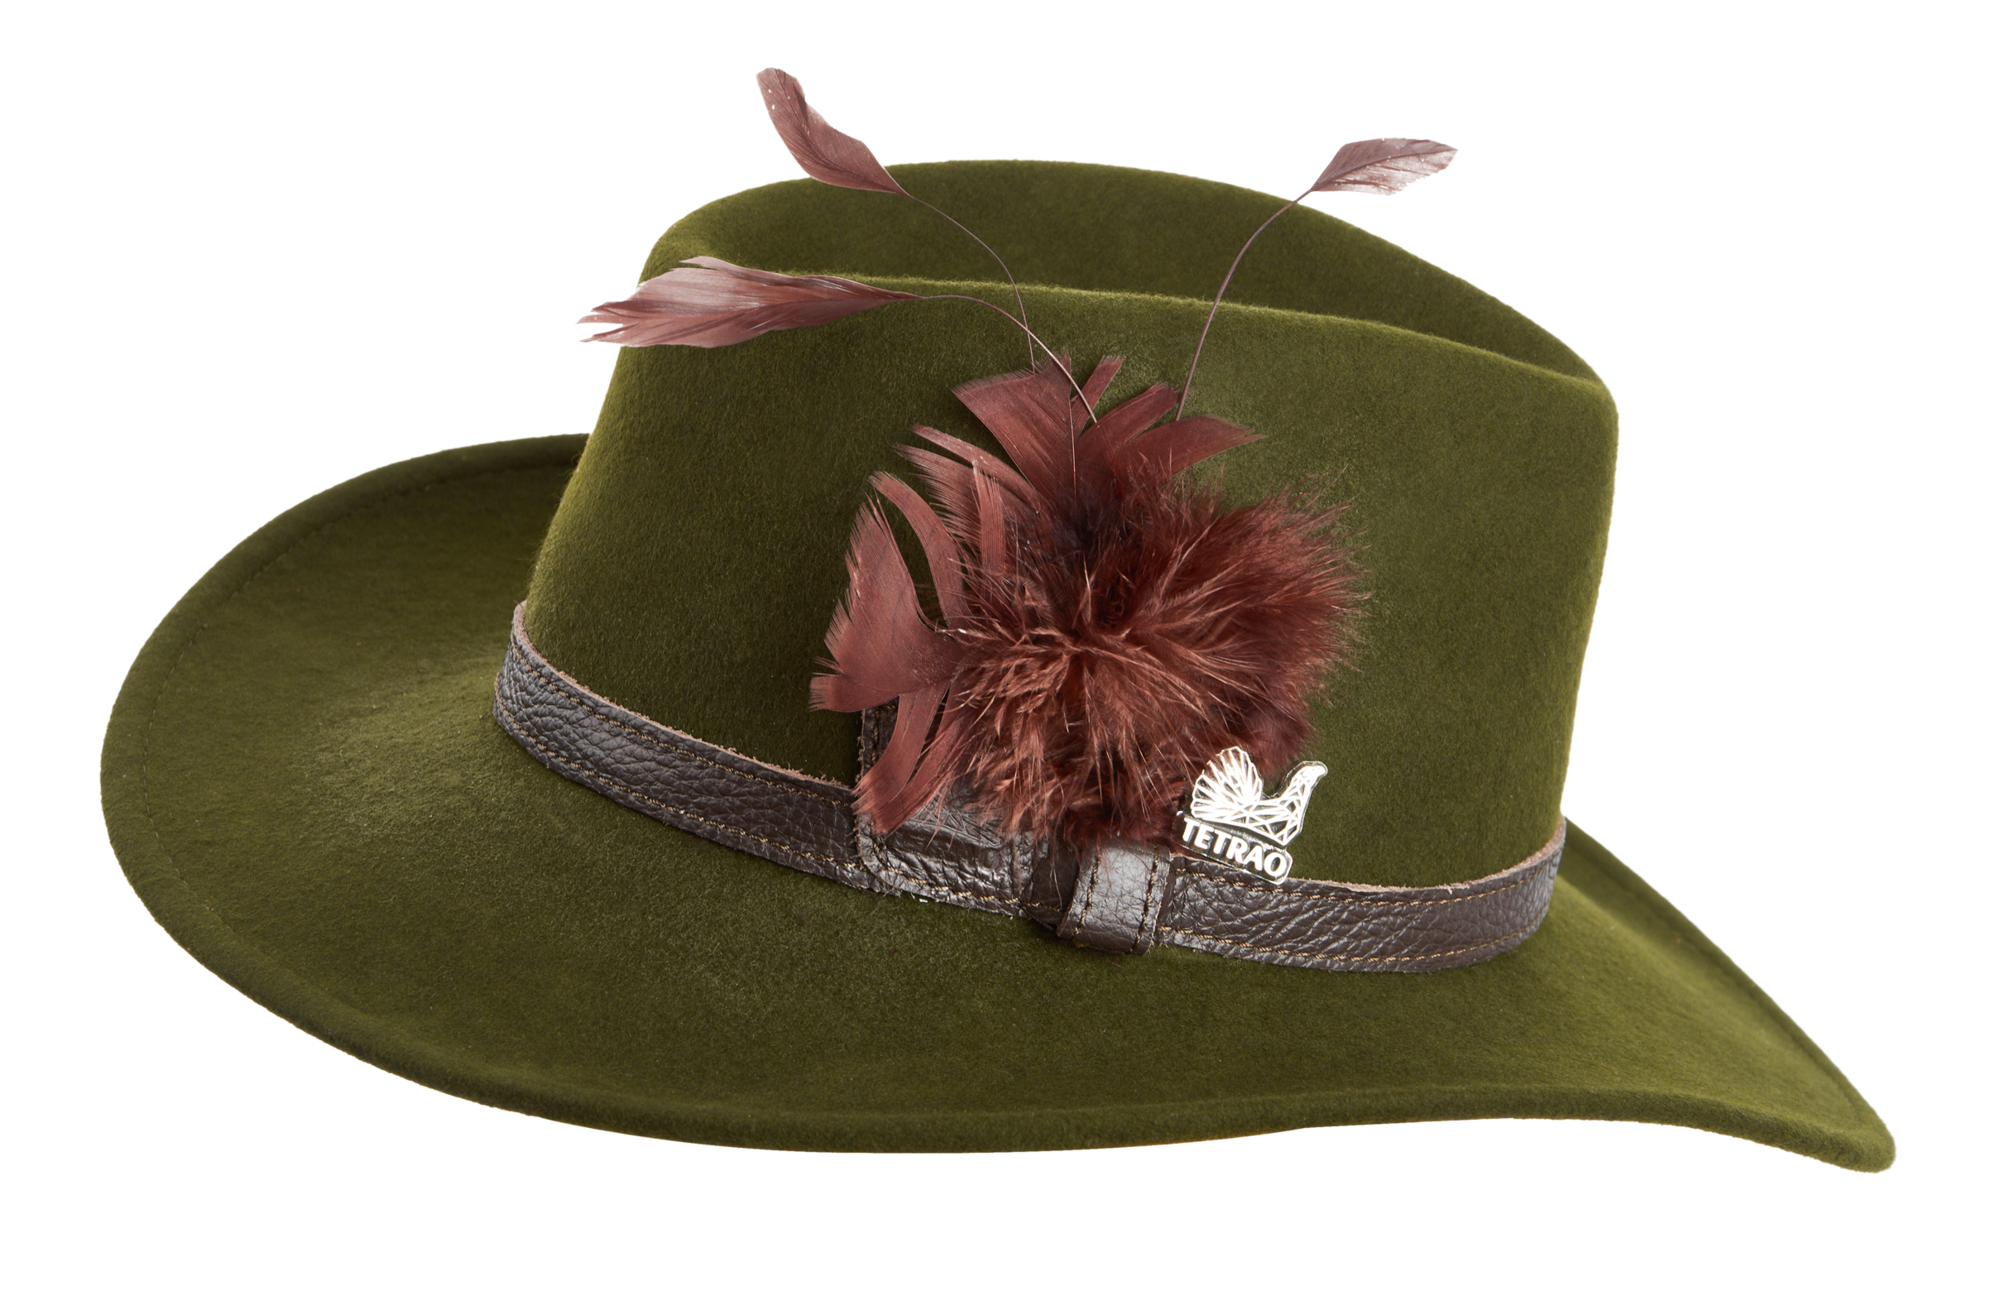 Dámsky poľovnícky klobúk TETRAO - s hnedým remienkom zelený 57  